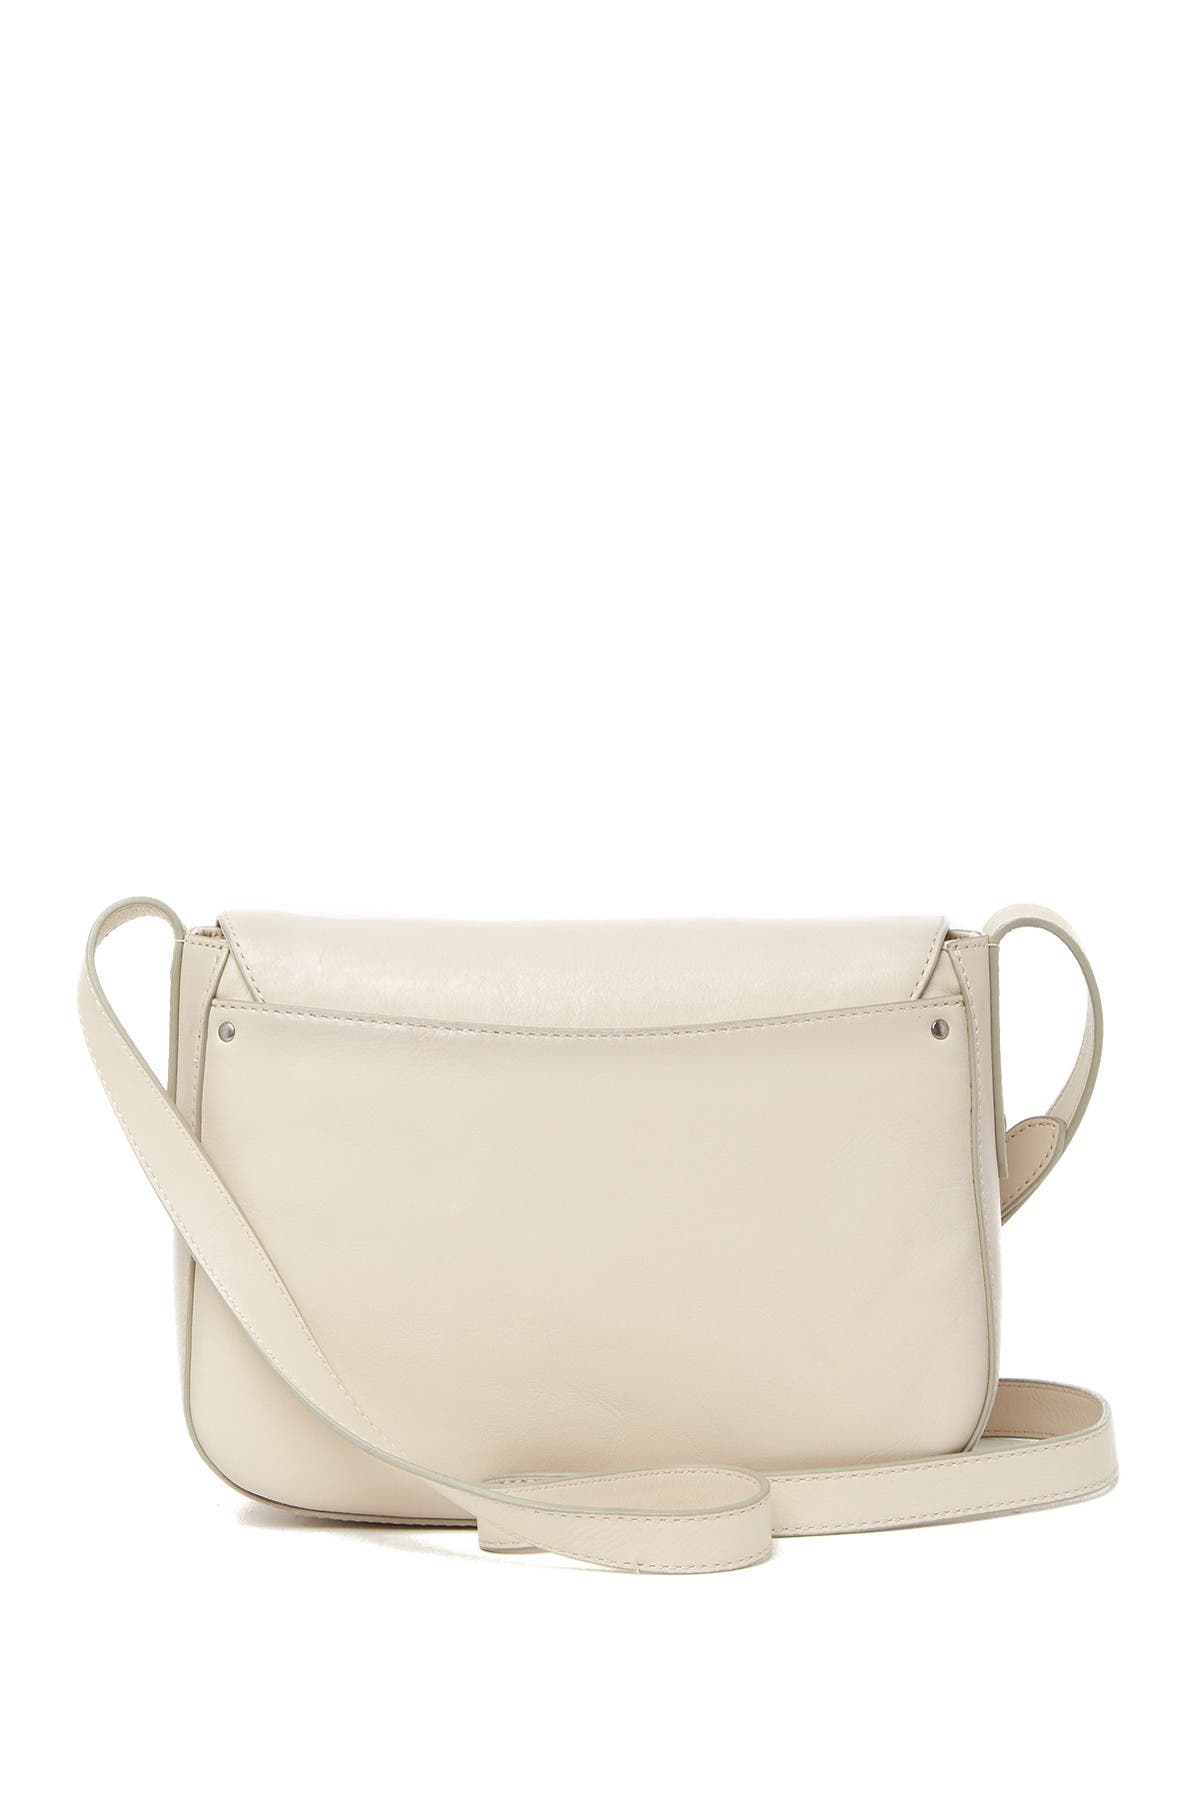 Frye | Olivia Leather Crossbody Bag | Nordstrom Rack